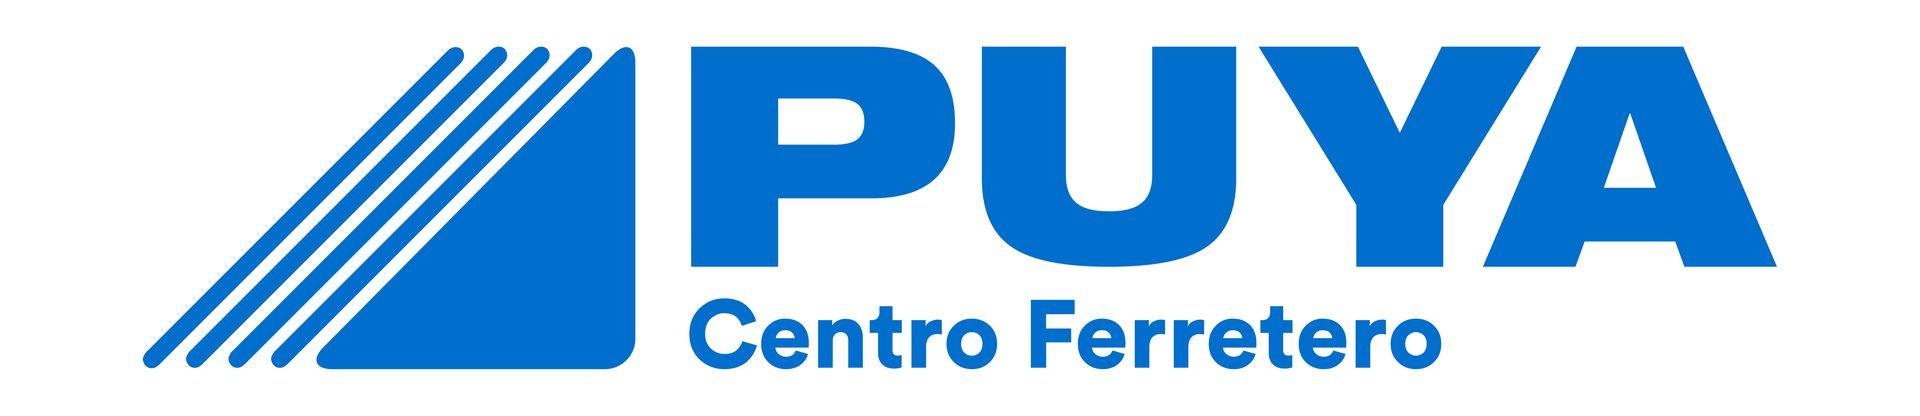 Puya Centro